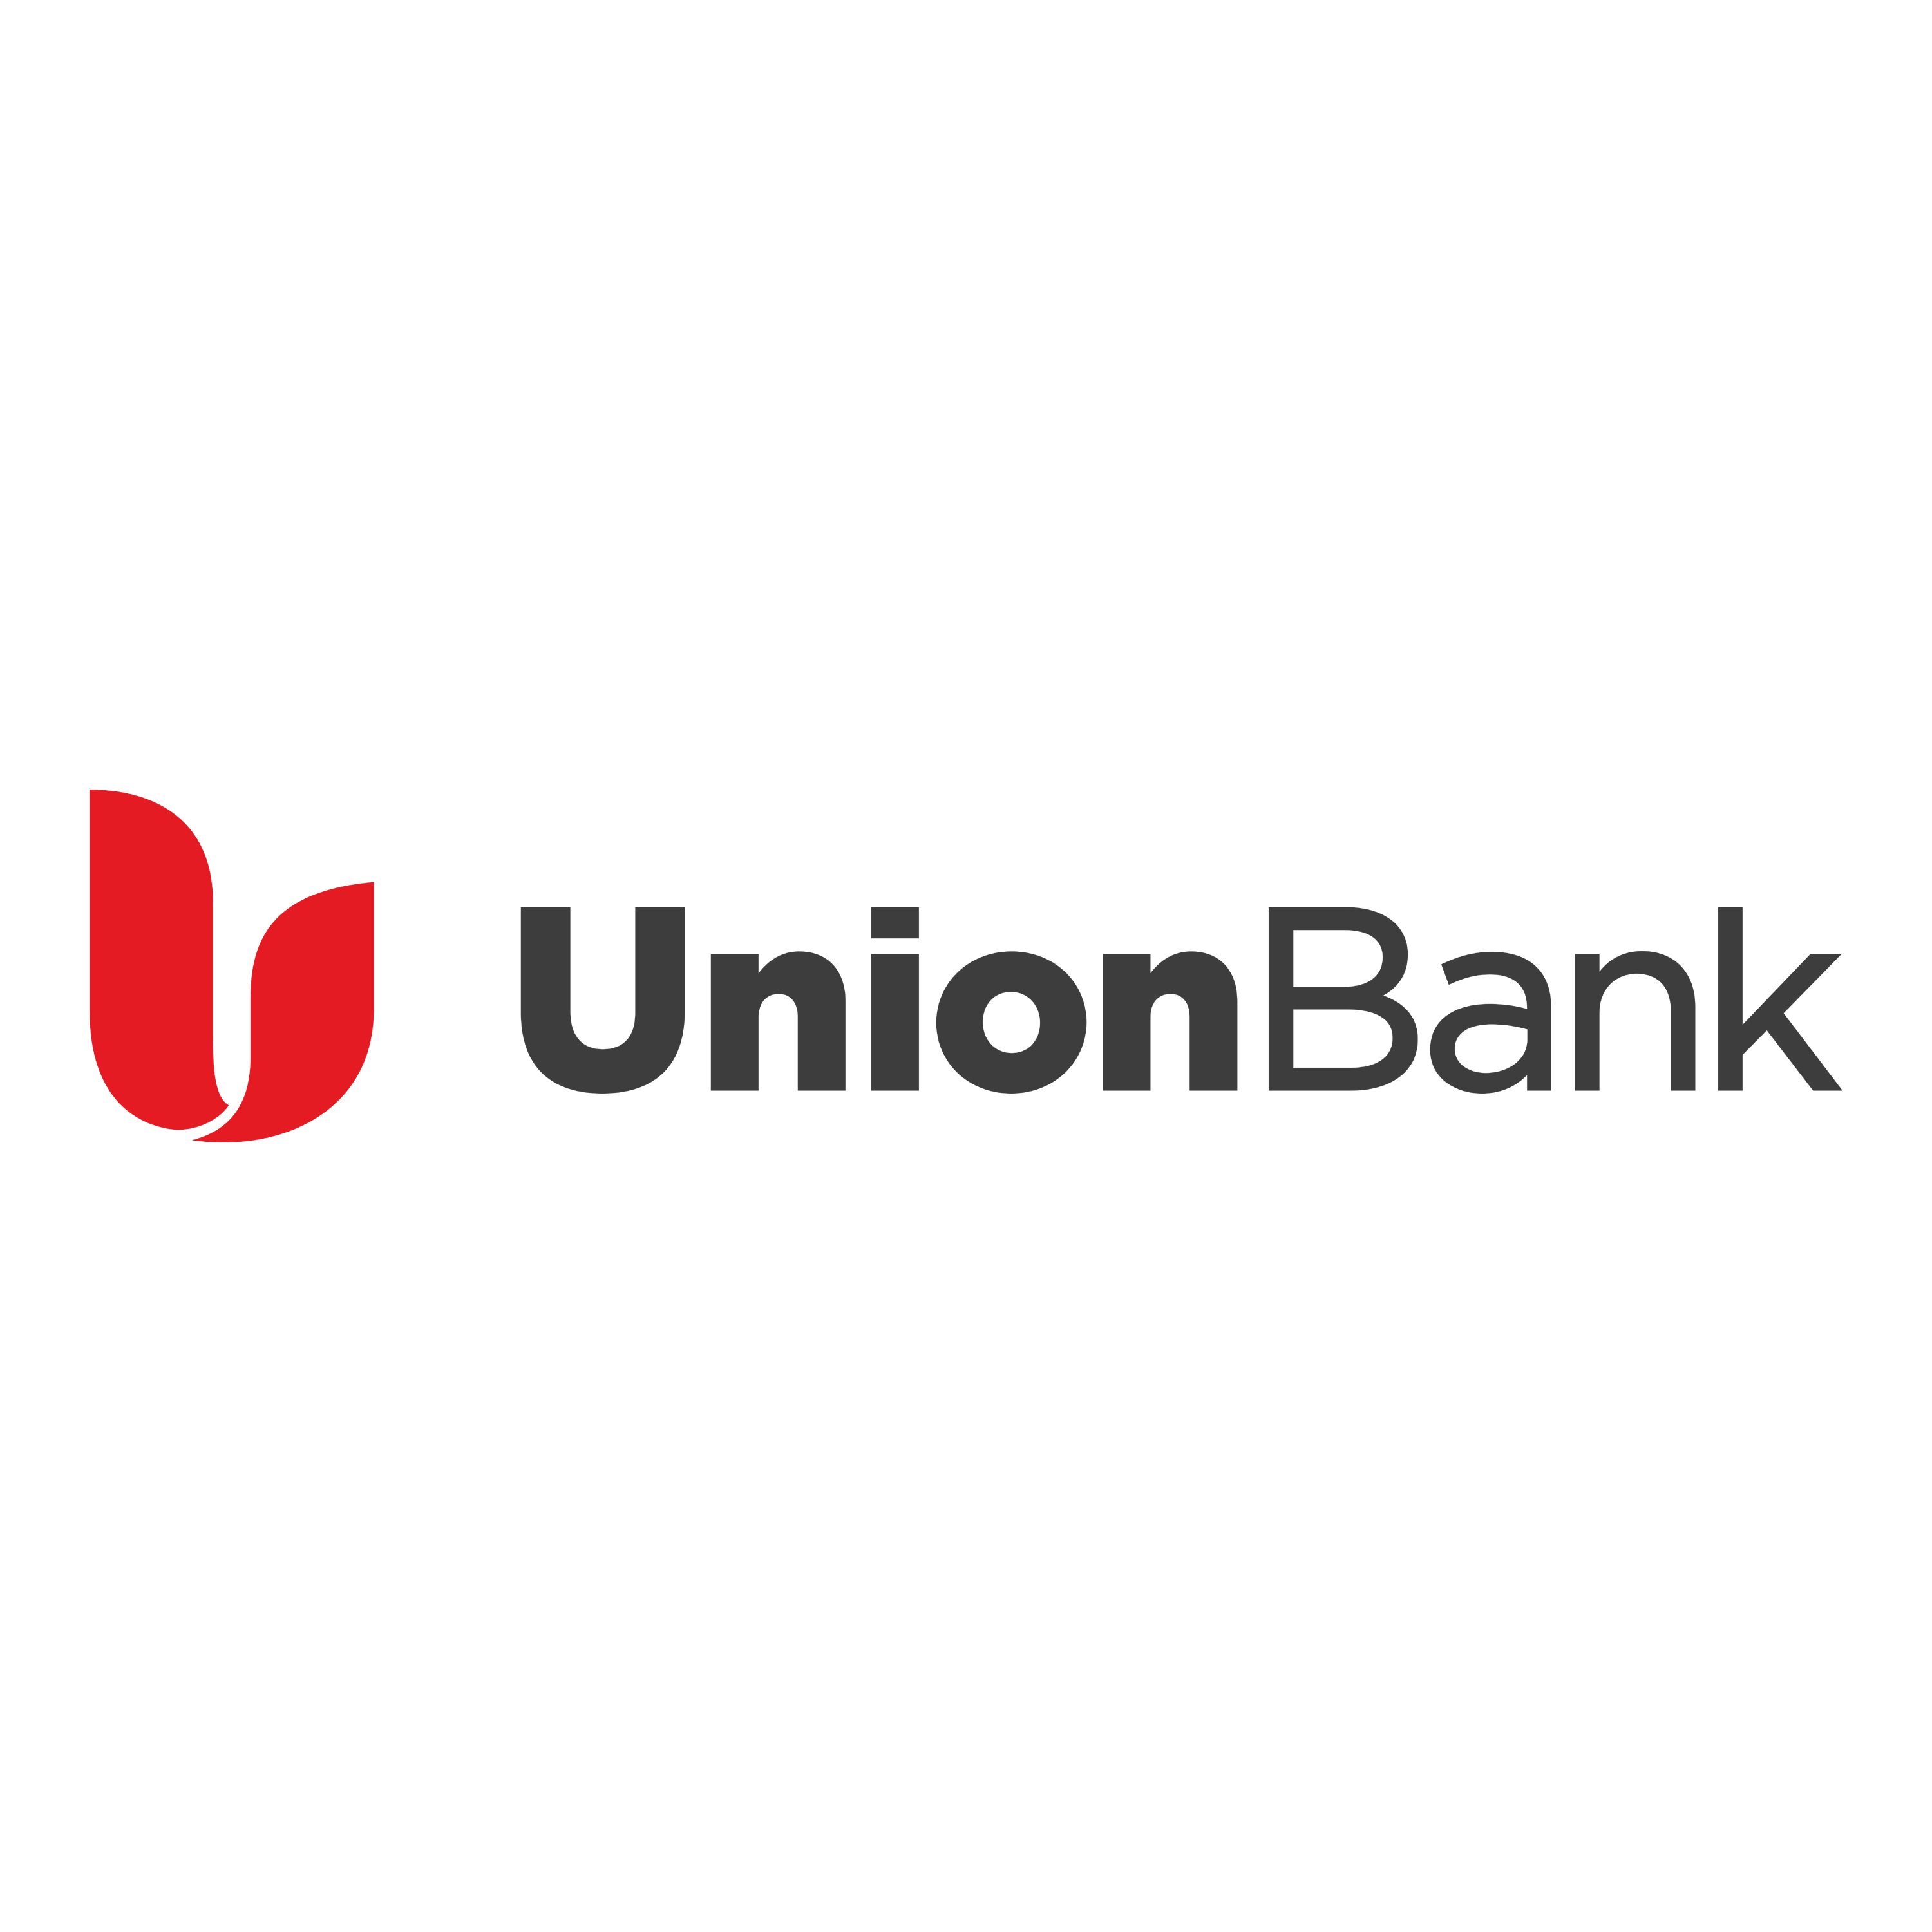 Union Bank 2017 Logo Transparent Image